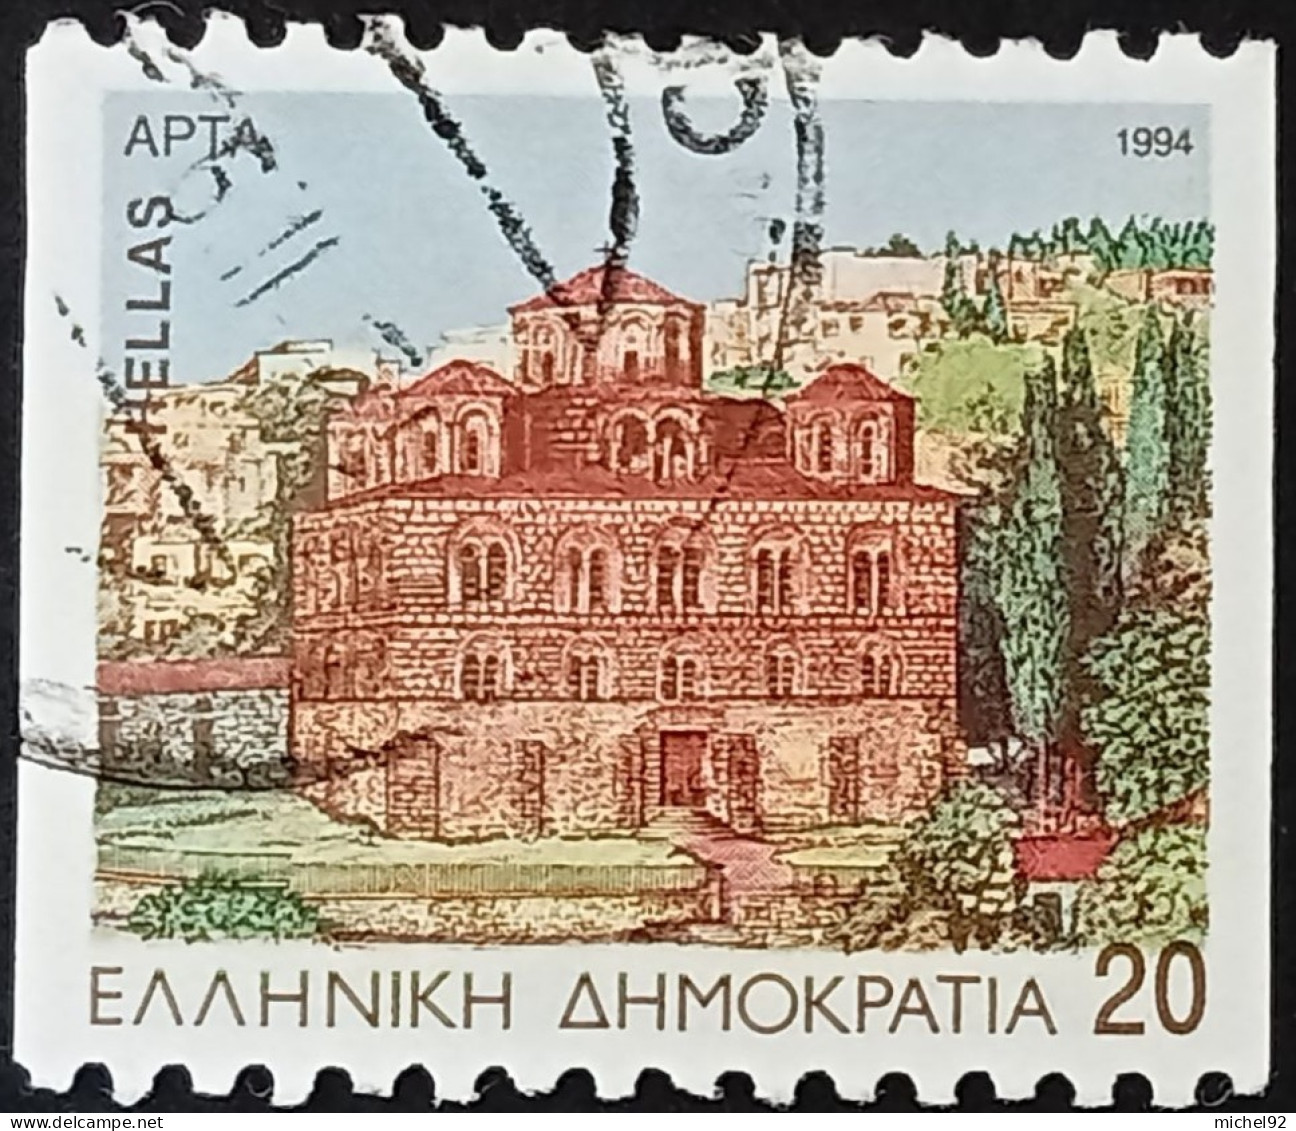 Grèce 1994 - YT N°1847 (B) - Oblitéré - Used Stamps